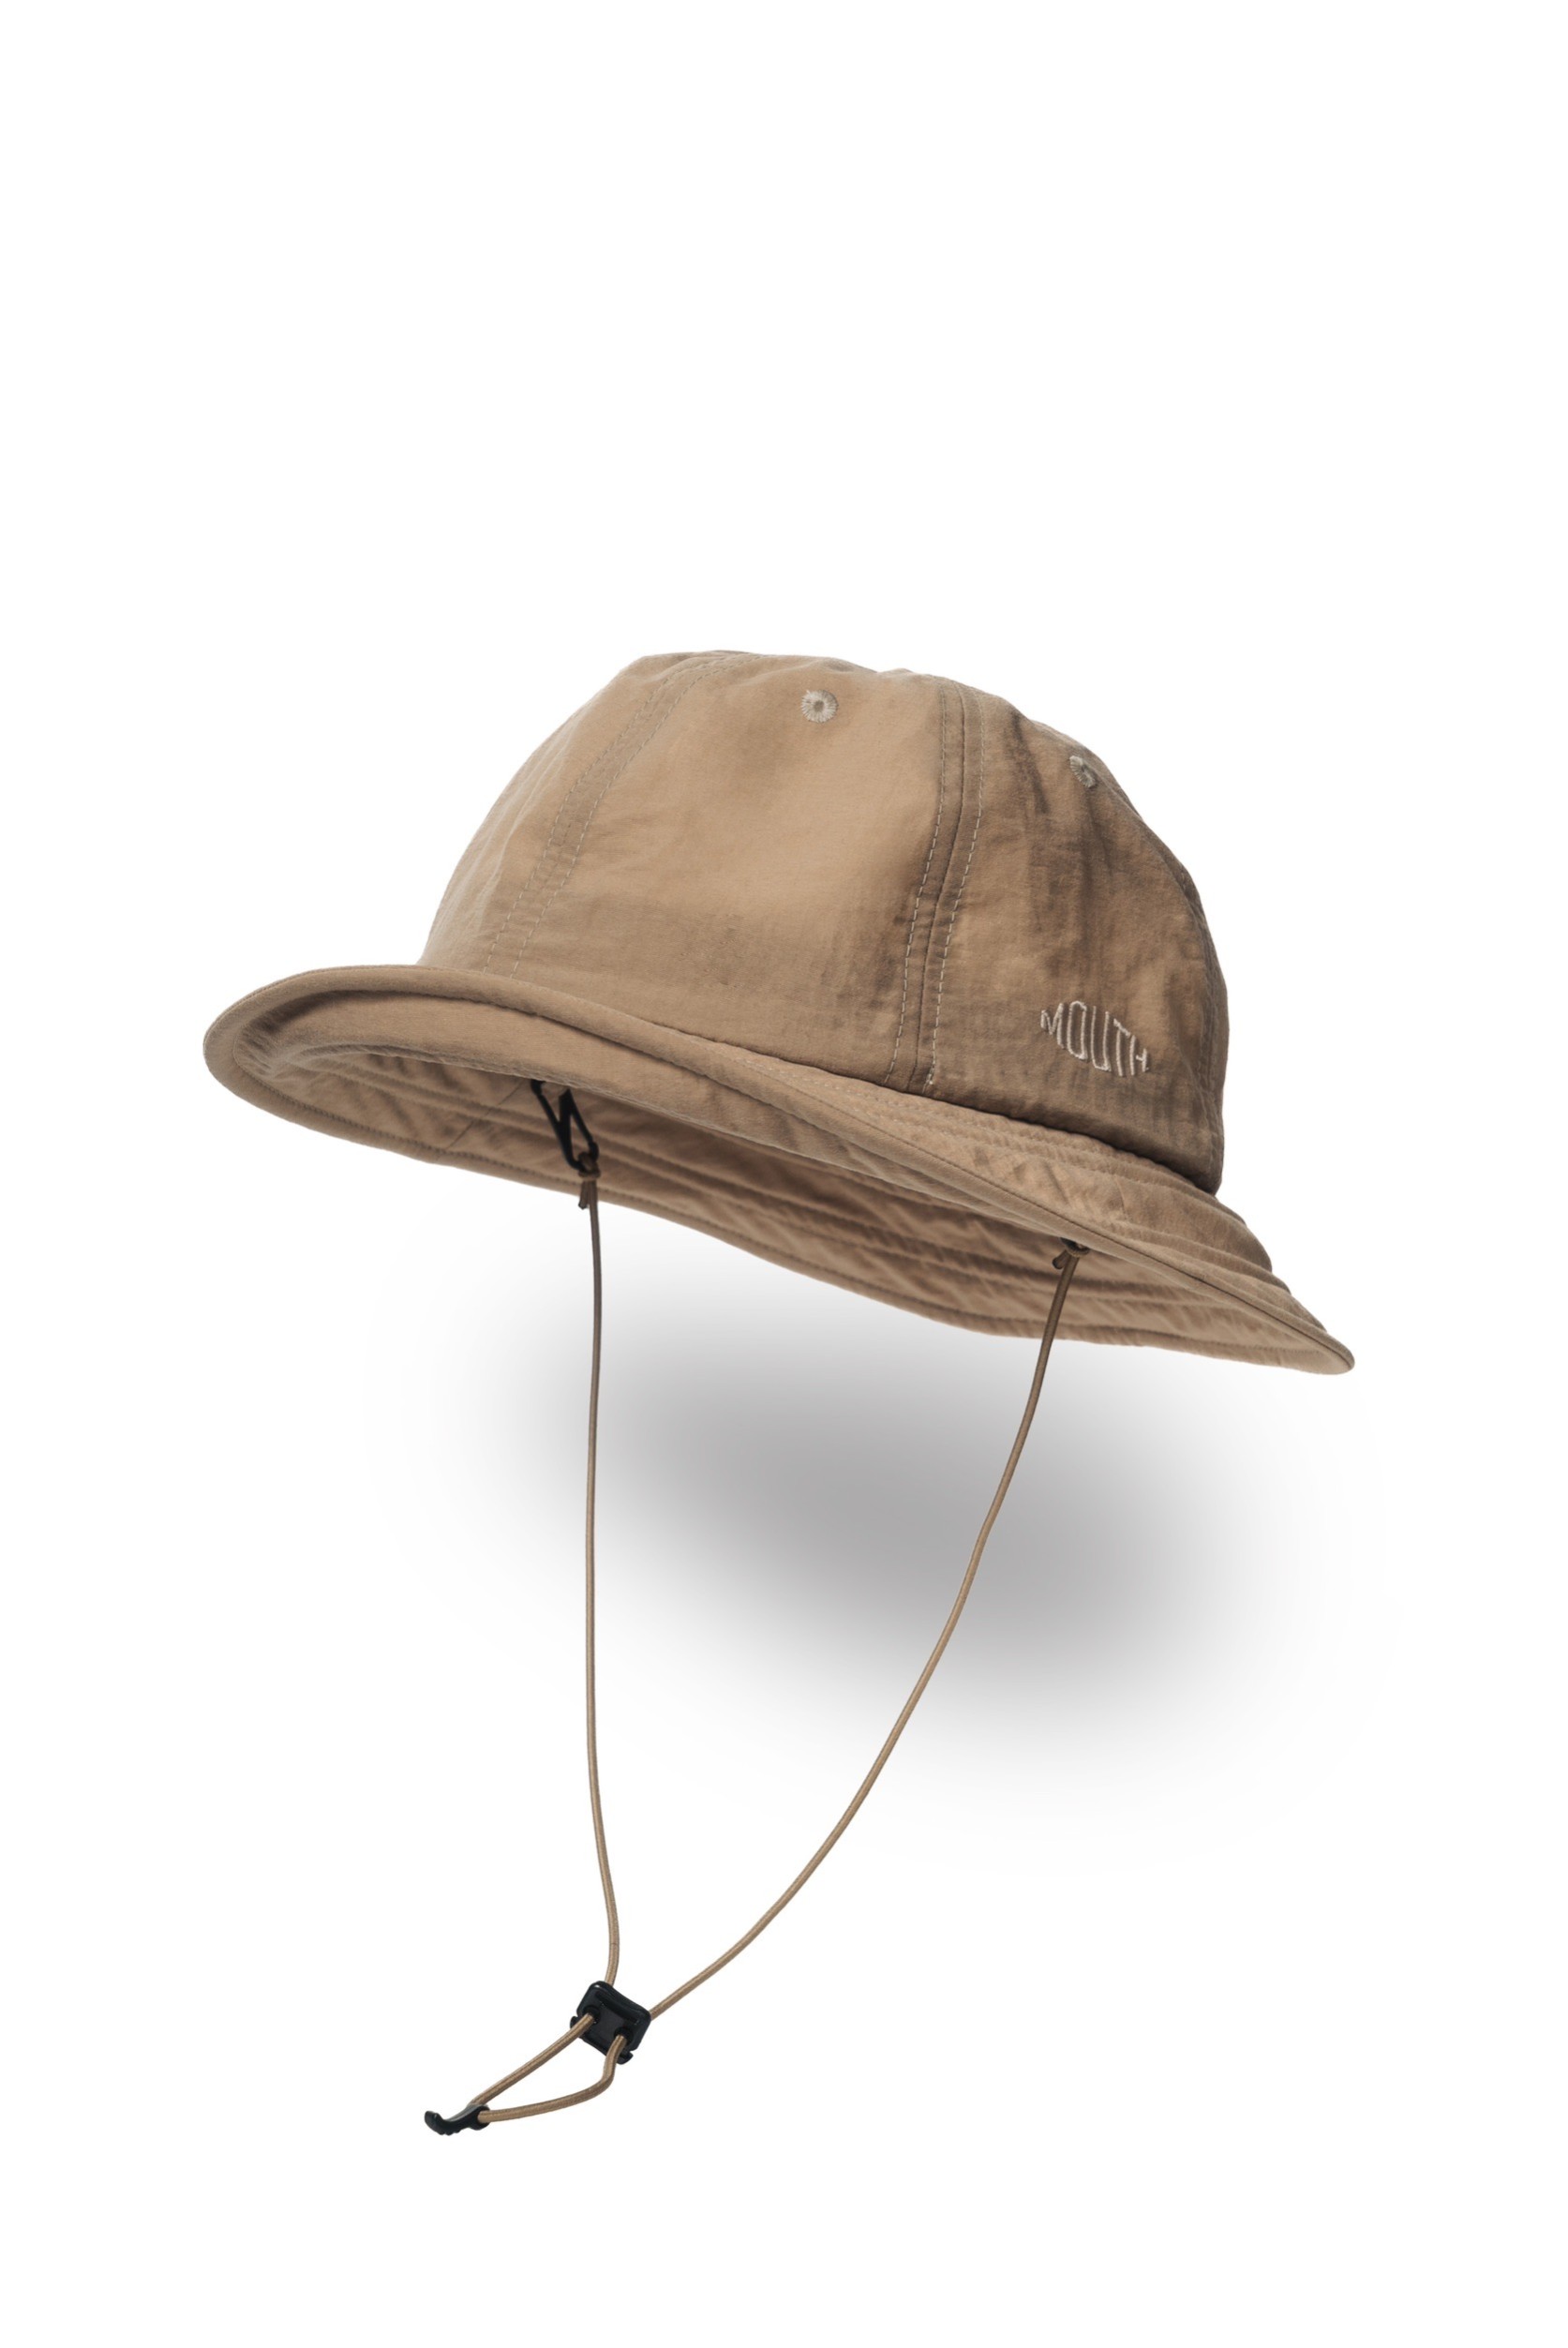 MHW24098 Flex Multi Hat (BEIGE) 12月20日12:00発売 メール便送料無料